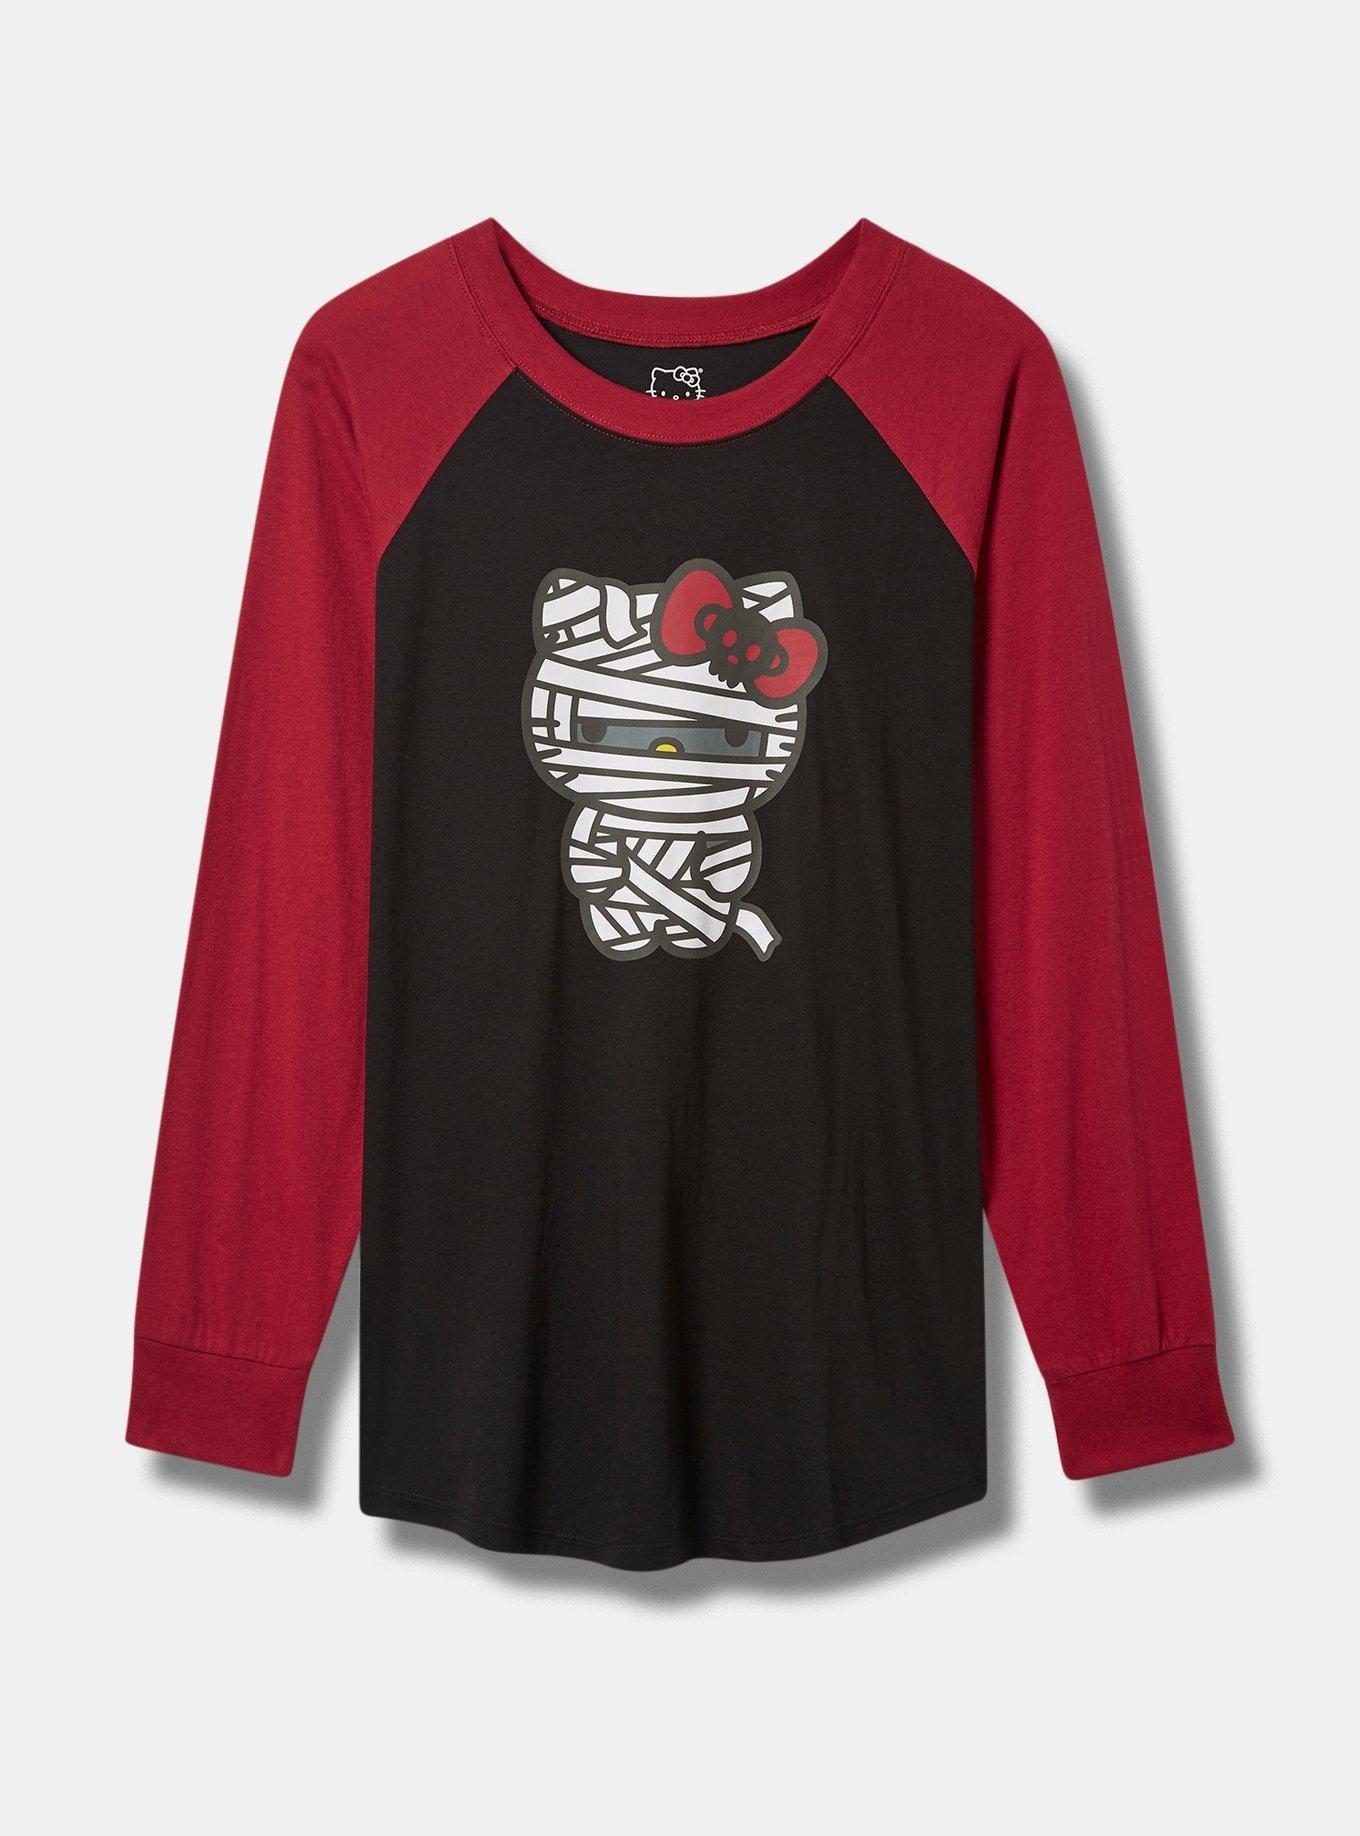 Official Hello kitty Washington nationals baseball T-shirt, hoodie, tank  top, sweater and long sleeve t-shirt